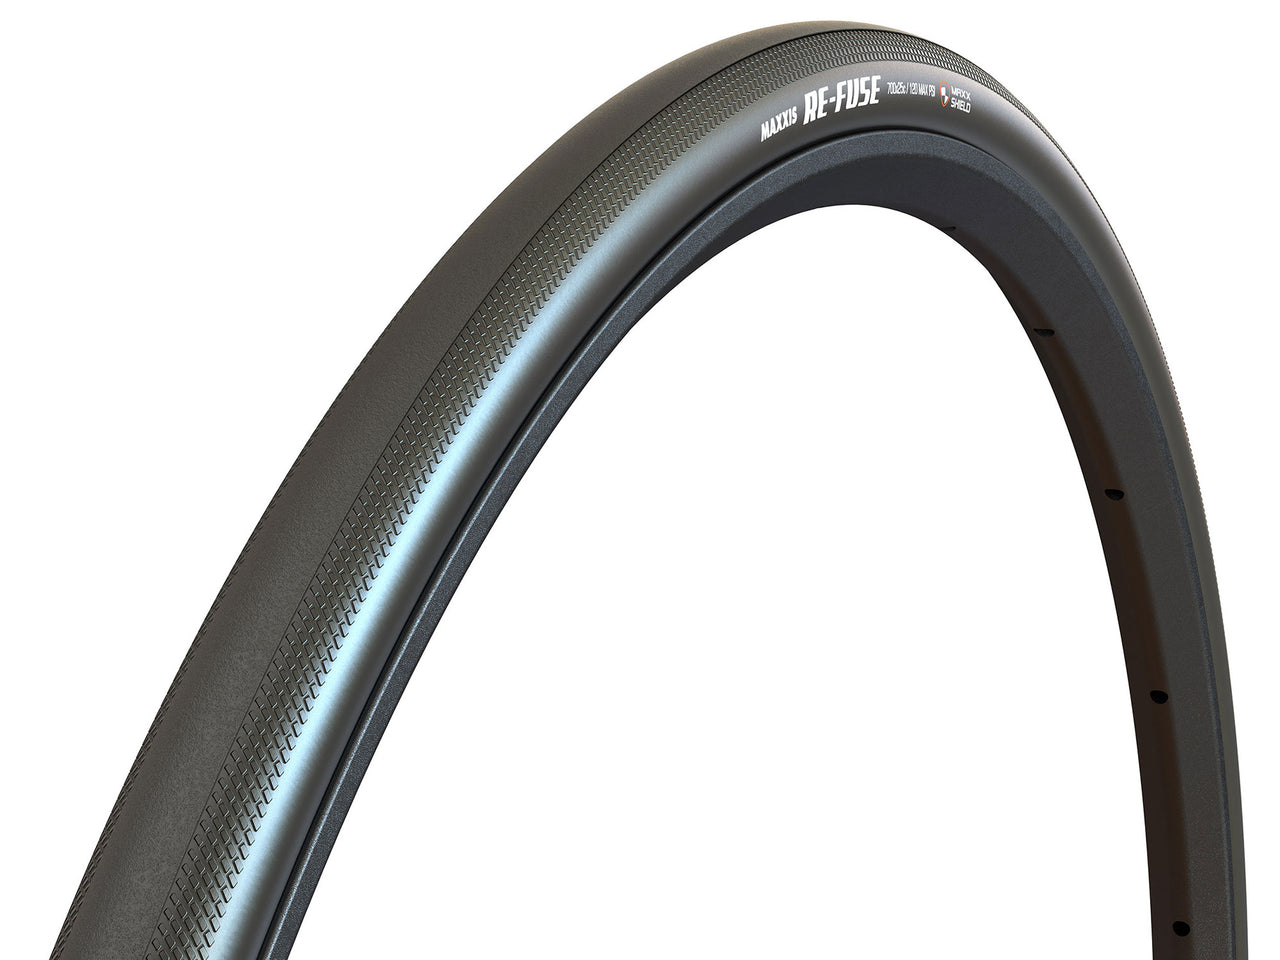 Maxxis Re-fuse Gen 2 700 X 25 Endurance All Season Folding Tyre [sz:700]